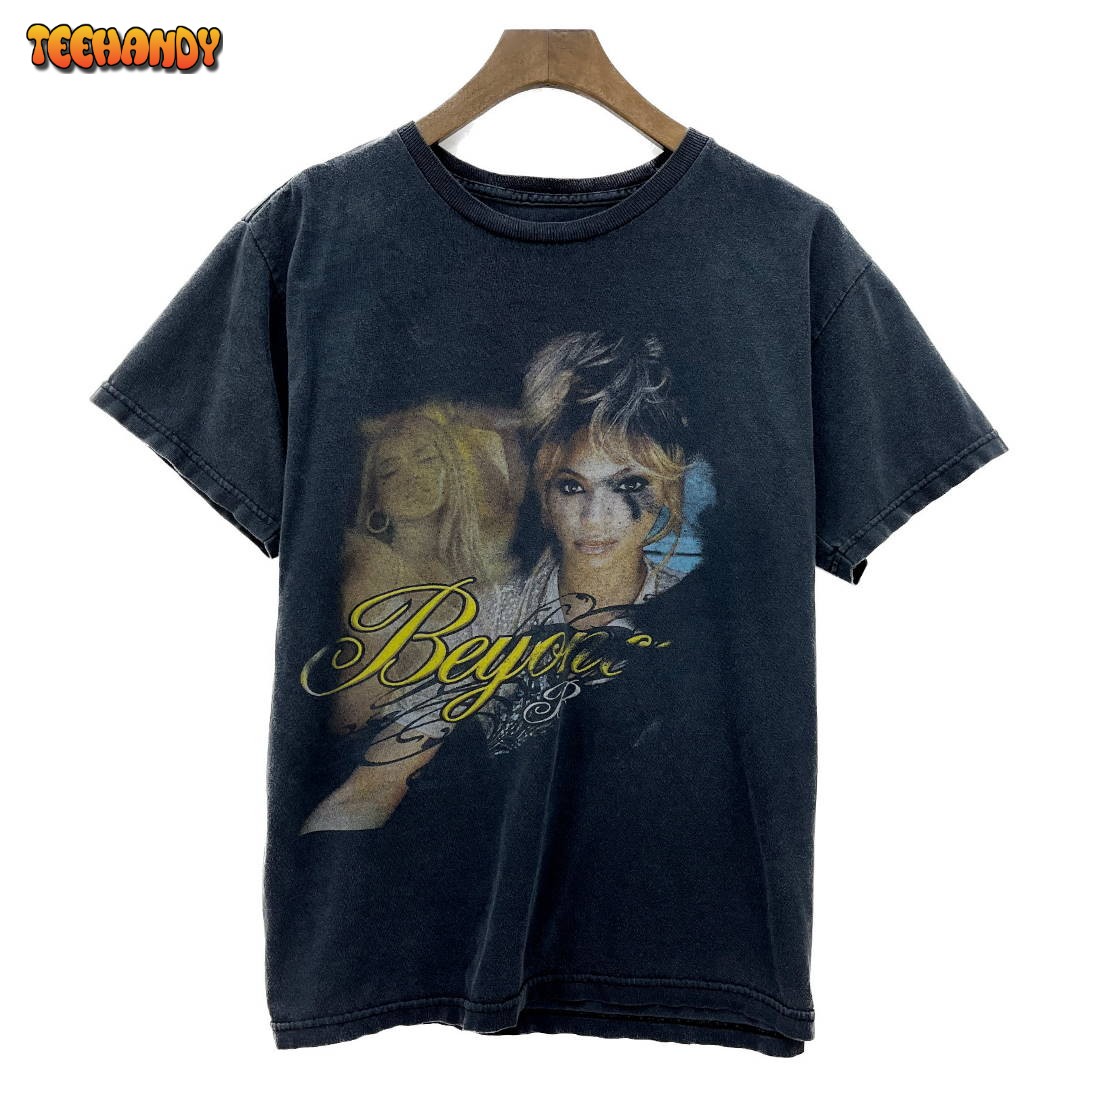 2007 Beyonce Robin Thicke Bday Tour Vintage T-Shirt